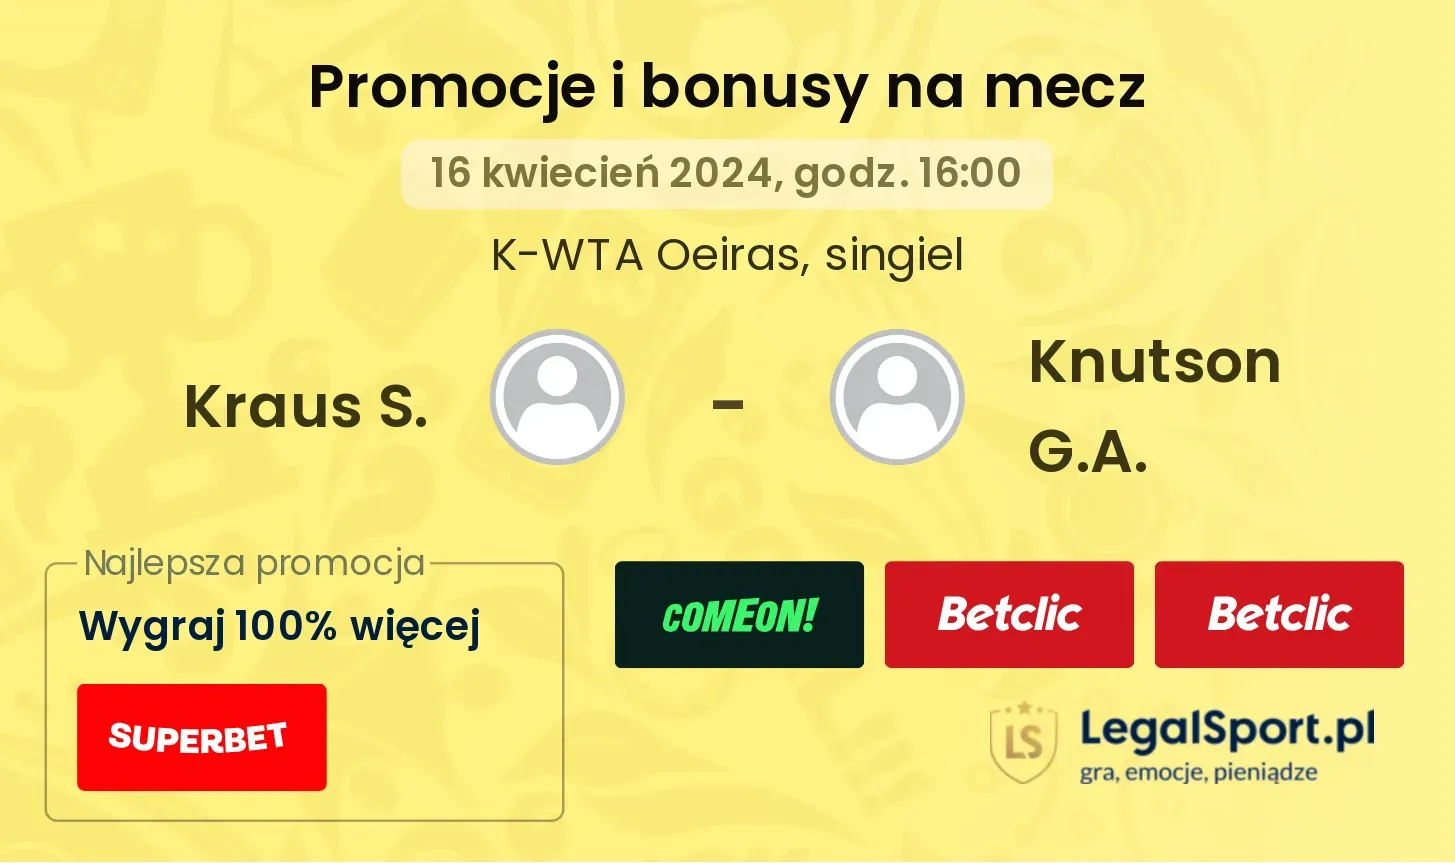 Kraus S. - Knutson G.A. promocje bonusy na mecz